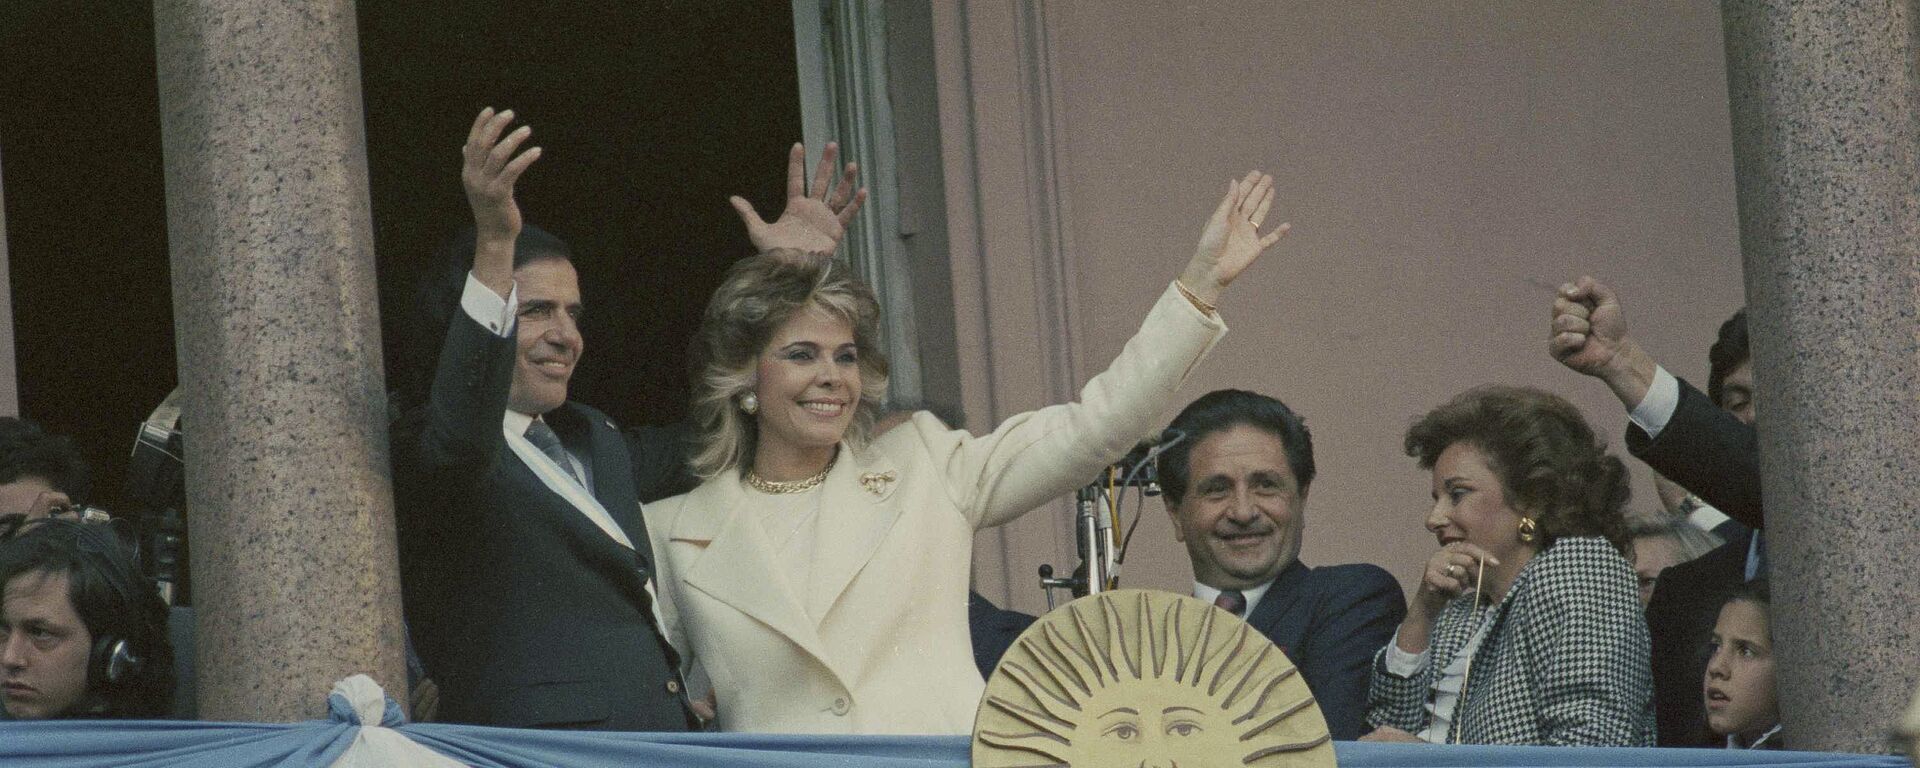 Carlos Menem, expresidente de Argentina y su exesposa, Zulema Yoma (archivo) - Sputnik Mundo, 1920, 09.07.2019